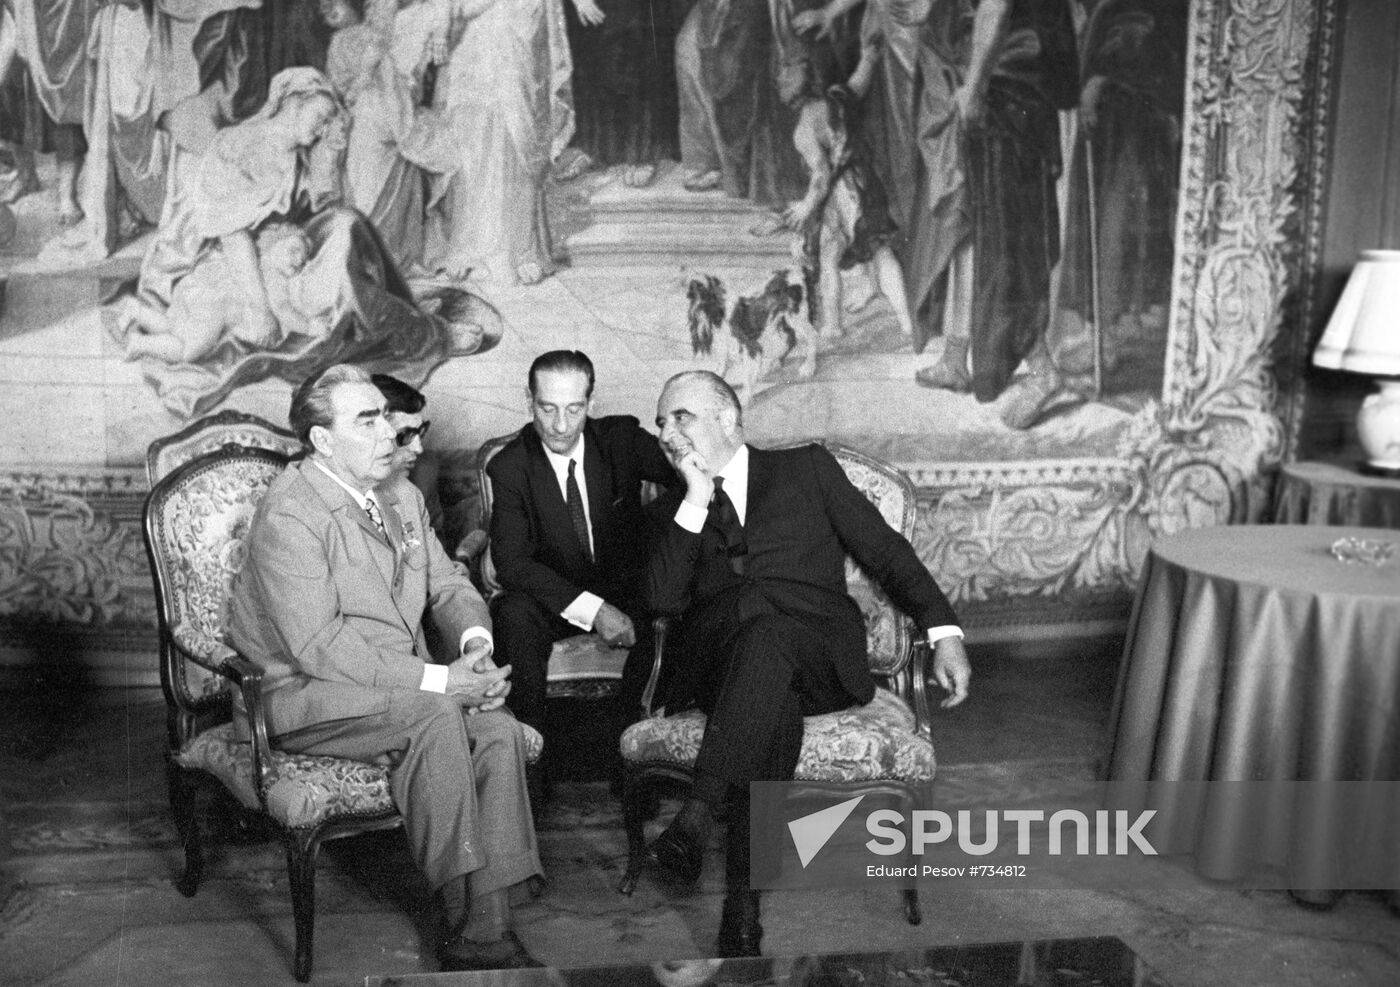 Soviet leader Leonid Brezhnev visiting France